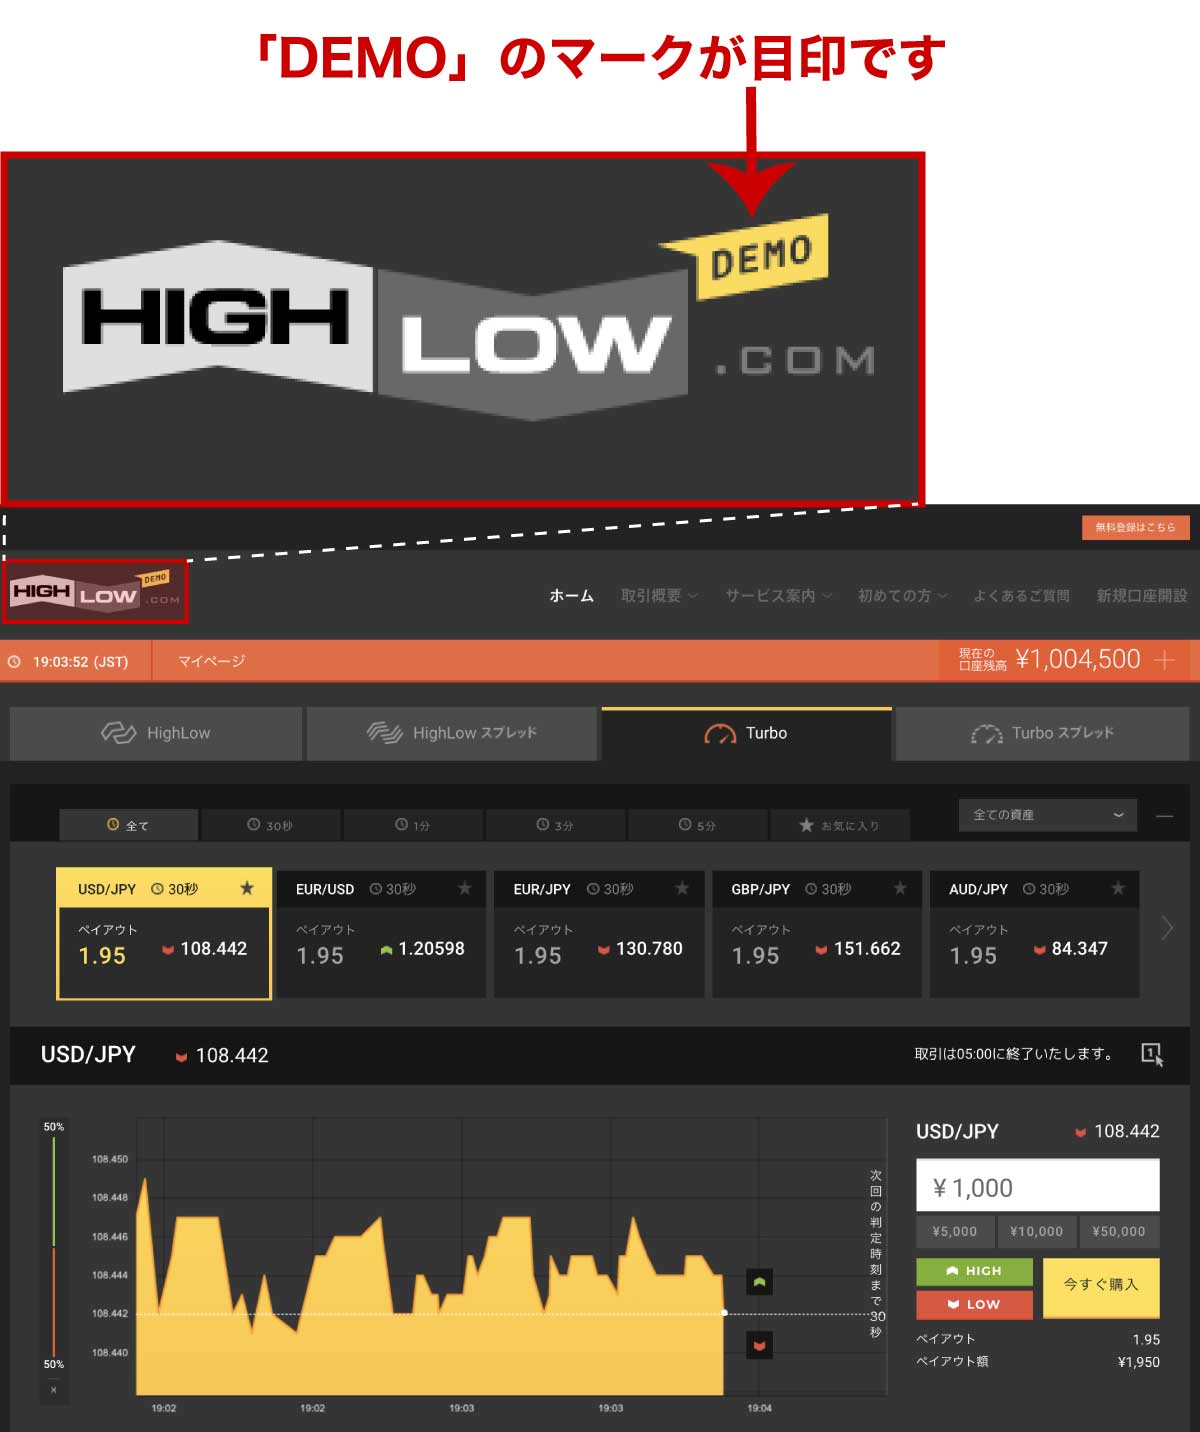 Highlow.comのデモ取引画面（「DEMO」のマークが目印です）